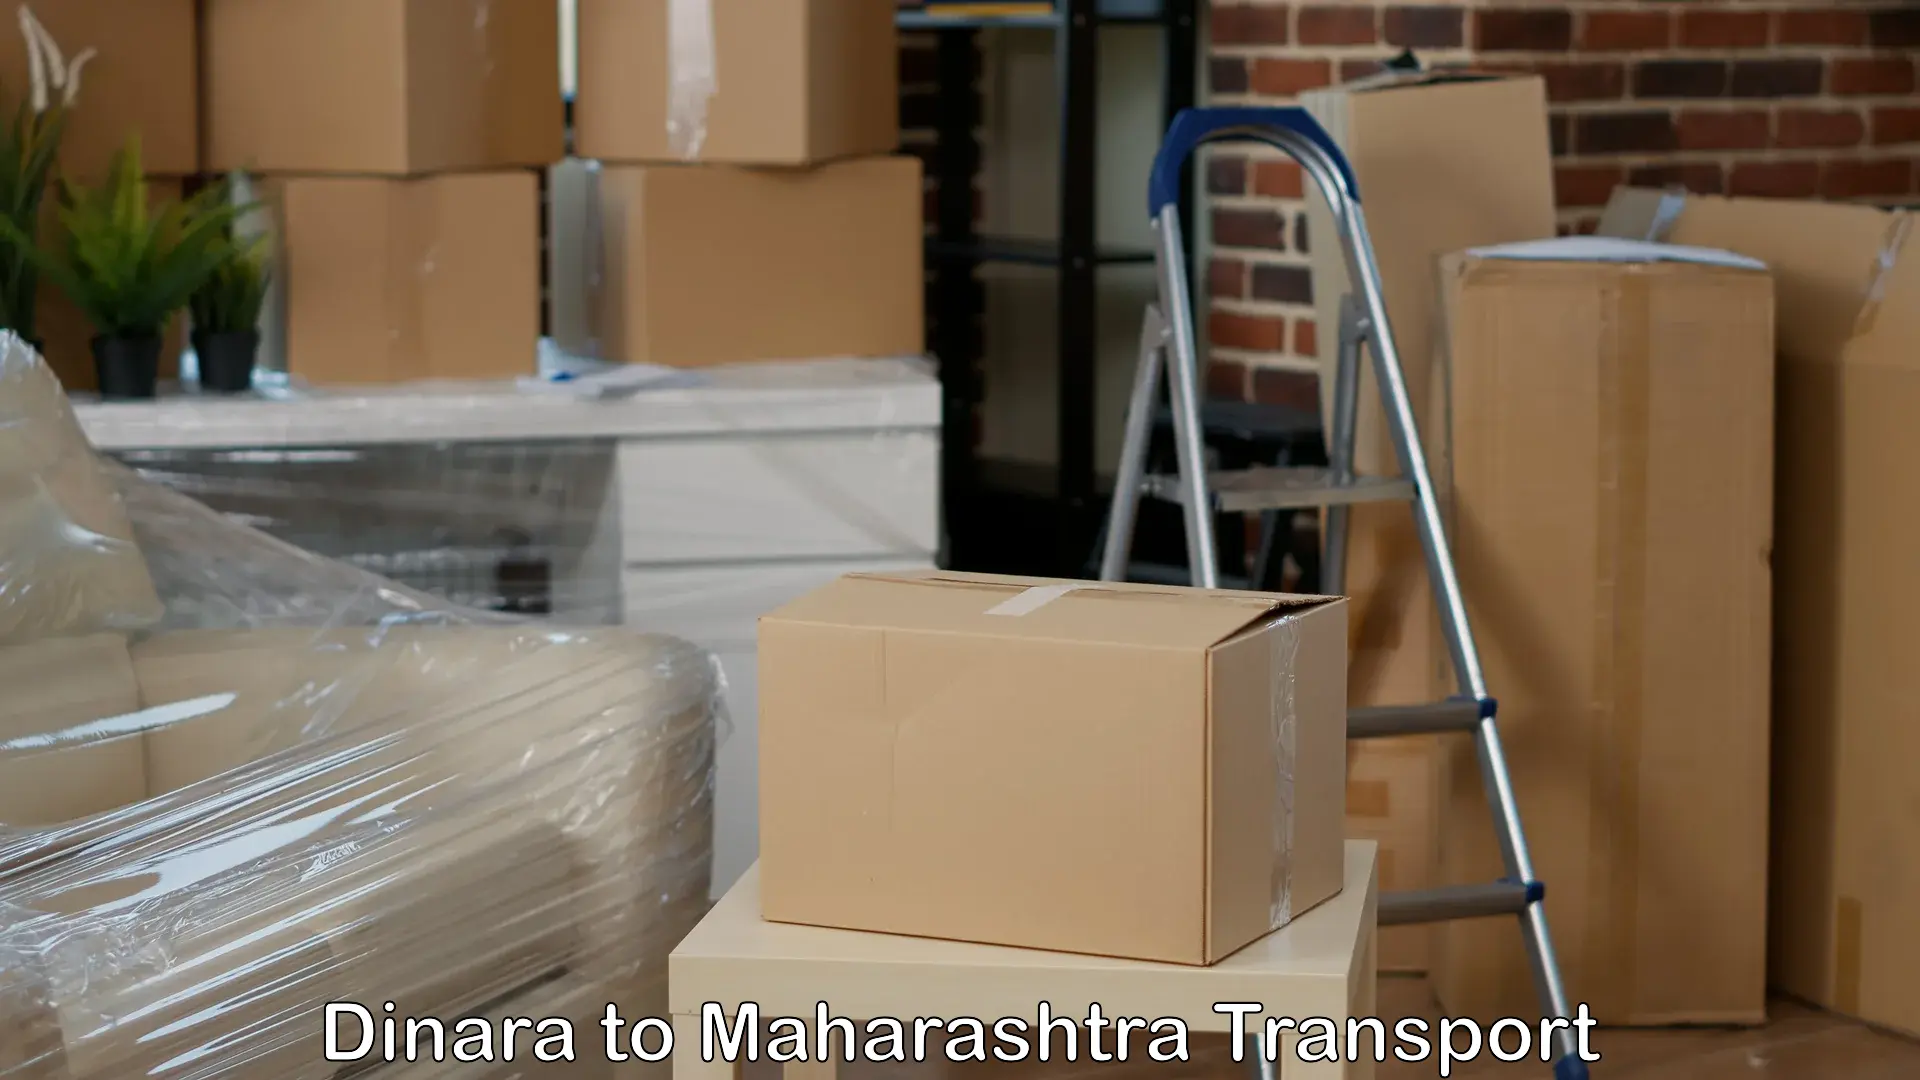 Transport in sharing Dinara to Navi Mumbai